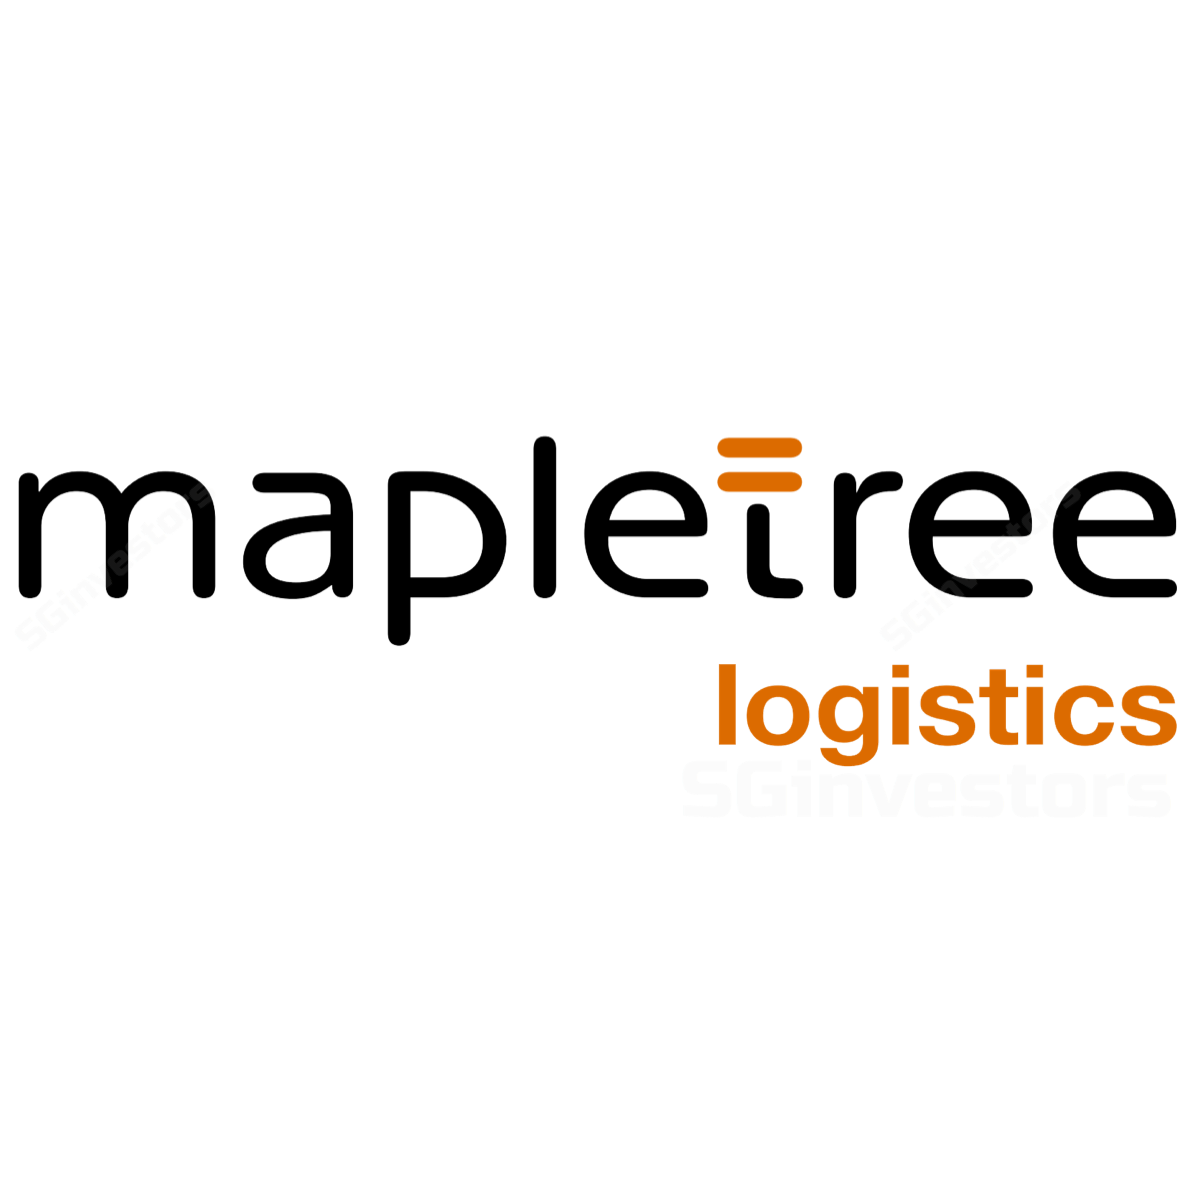 Mapletree Logistics Trust - DBS Vickers 2017-05-02: Taking the next quantum leap